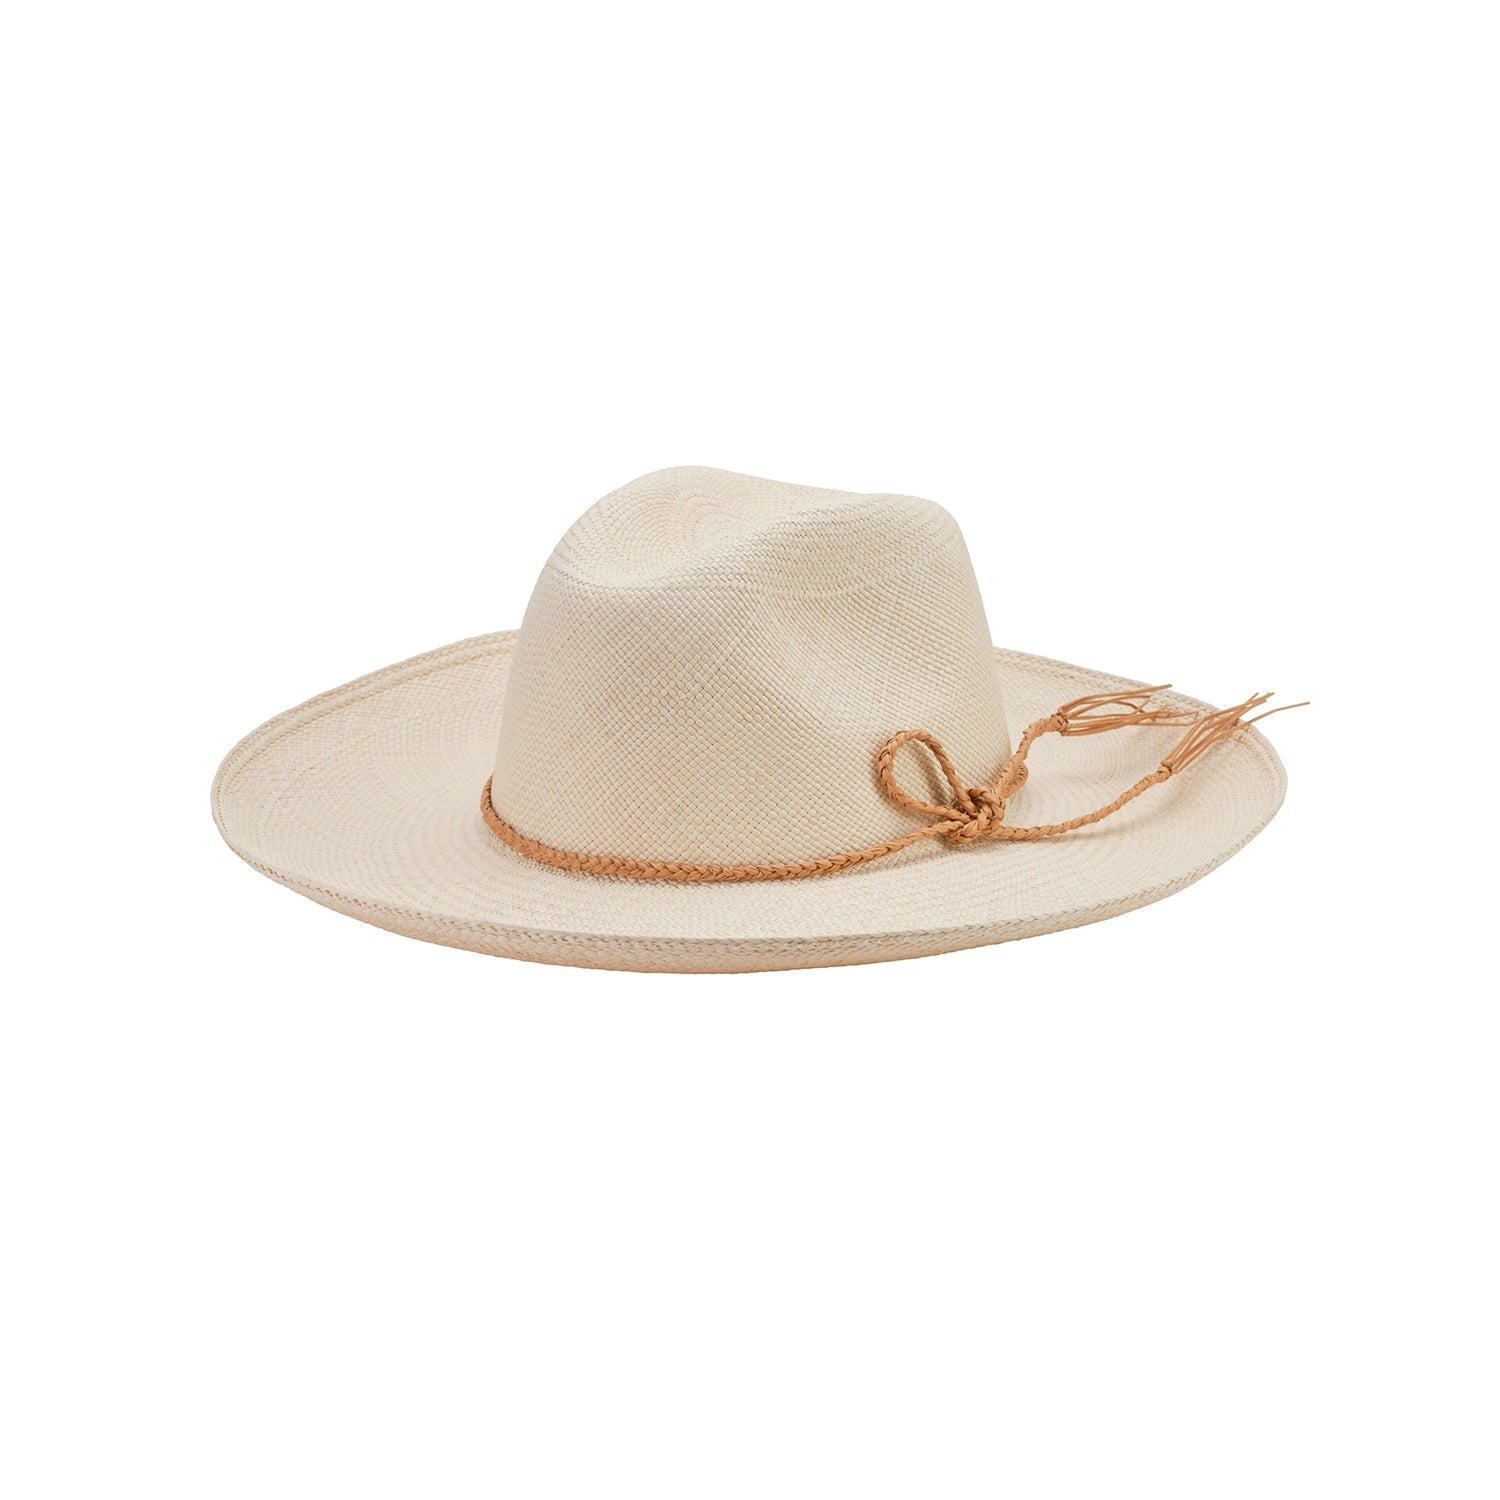 Provins - Wide Brim Hat artesano